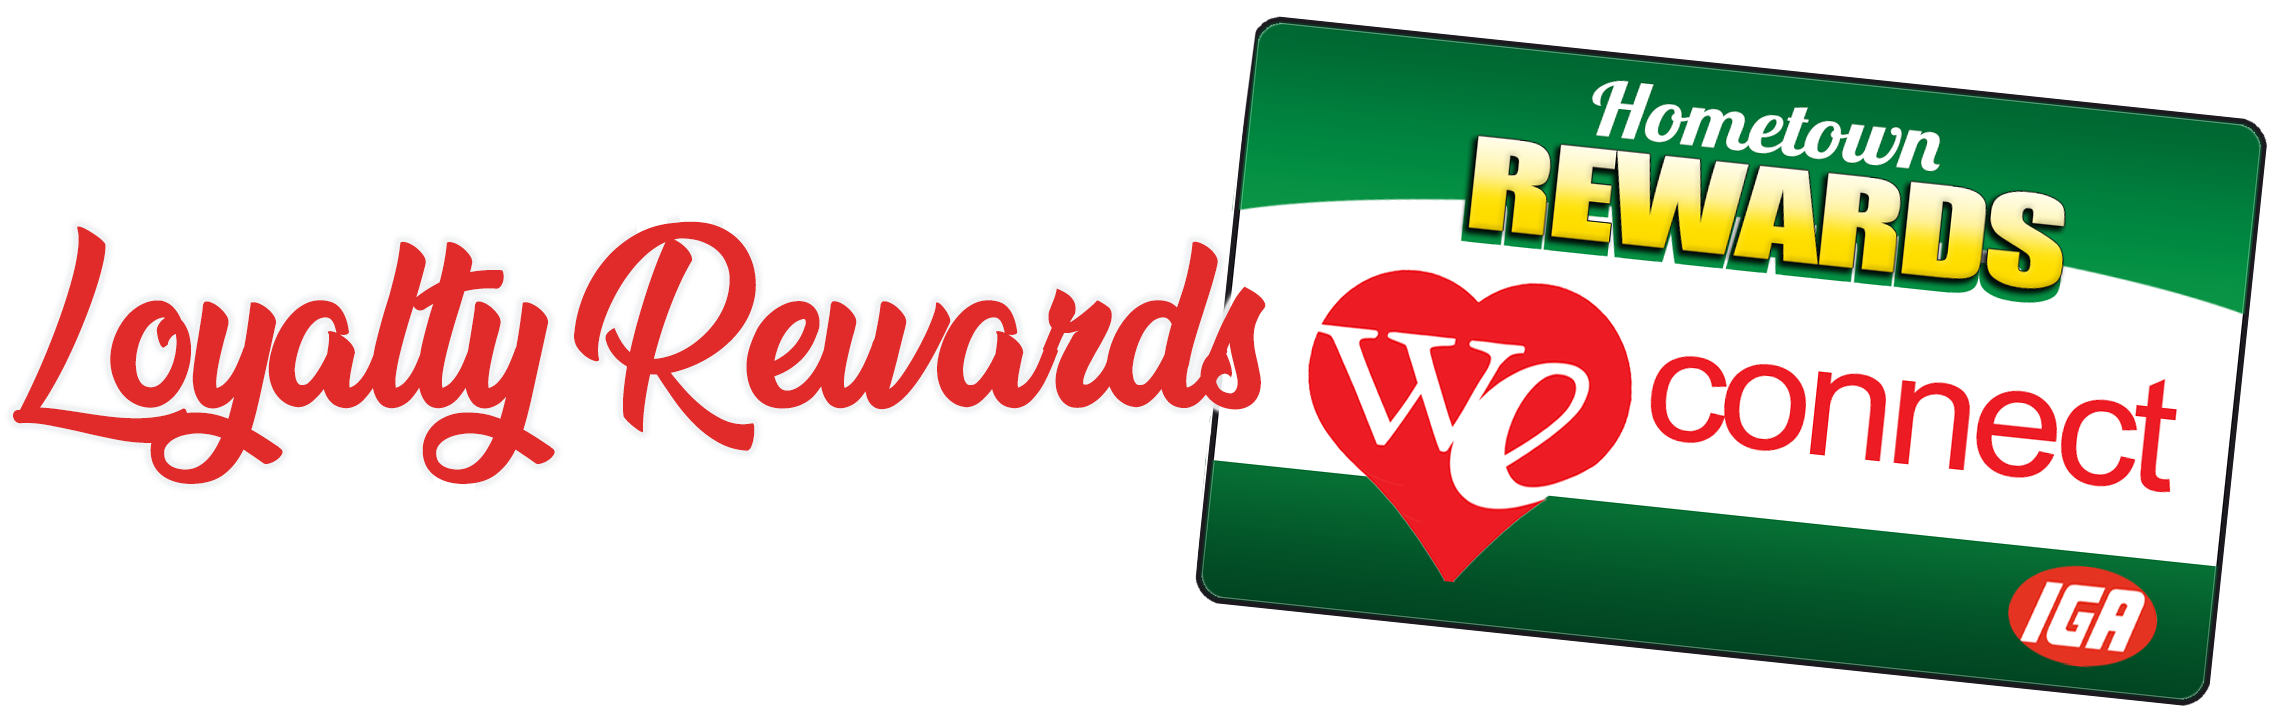 WeConnect Loyalty Rewards Logo